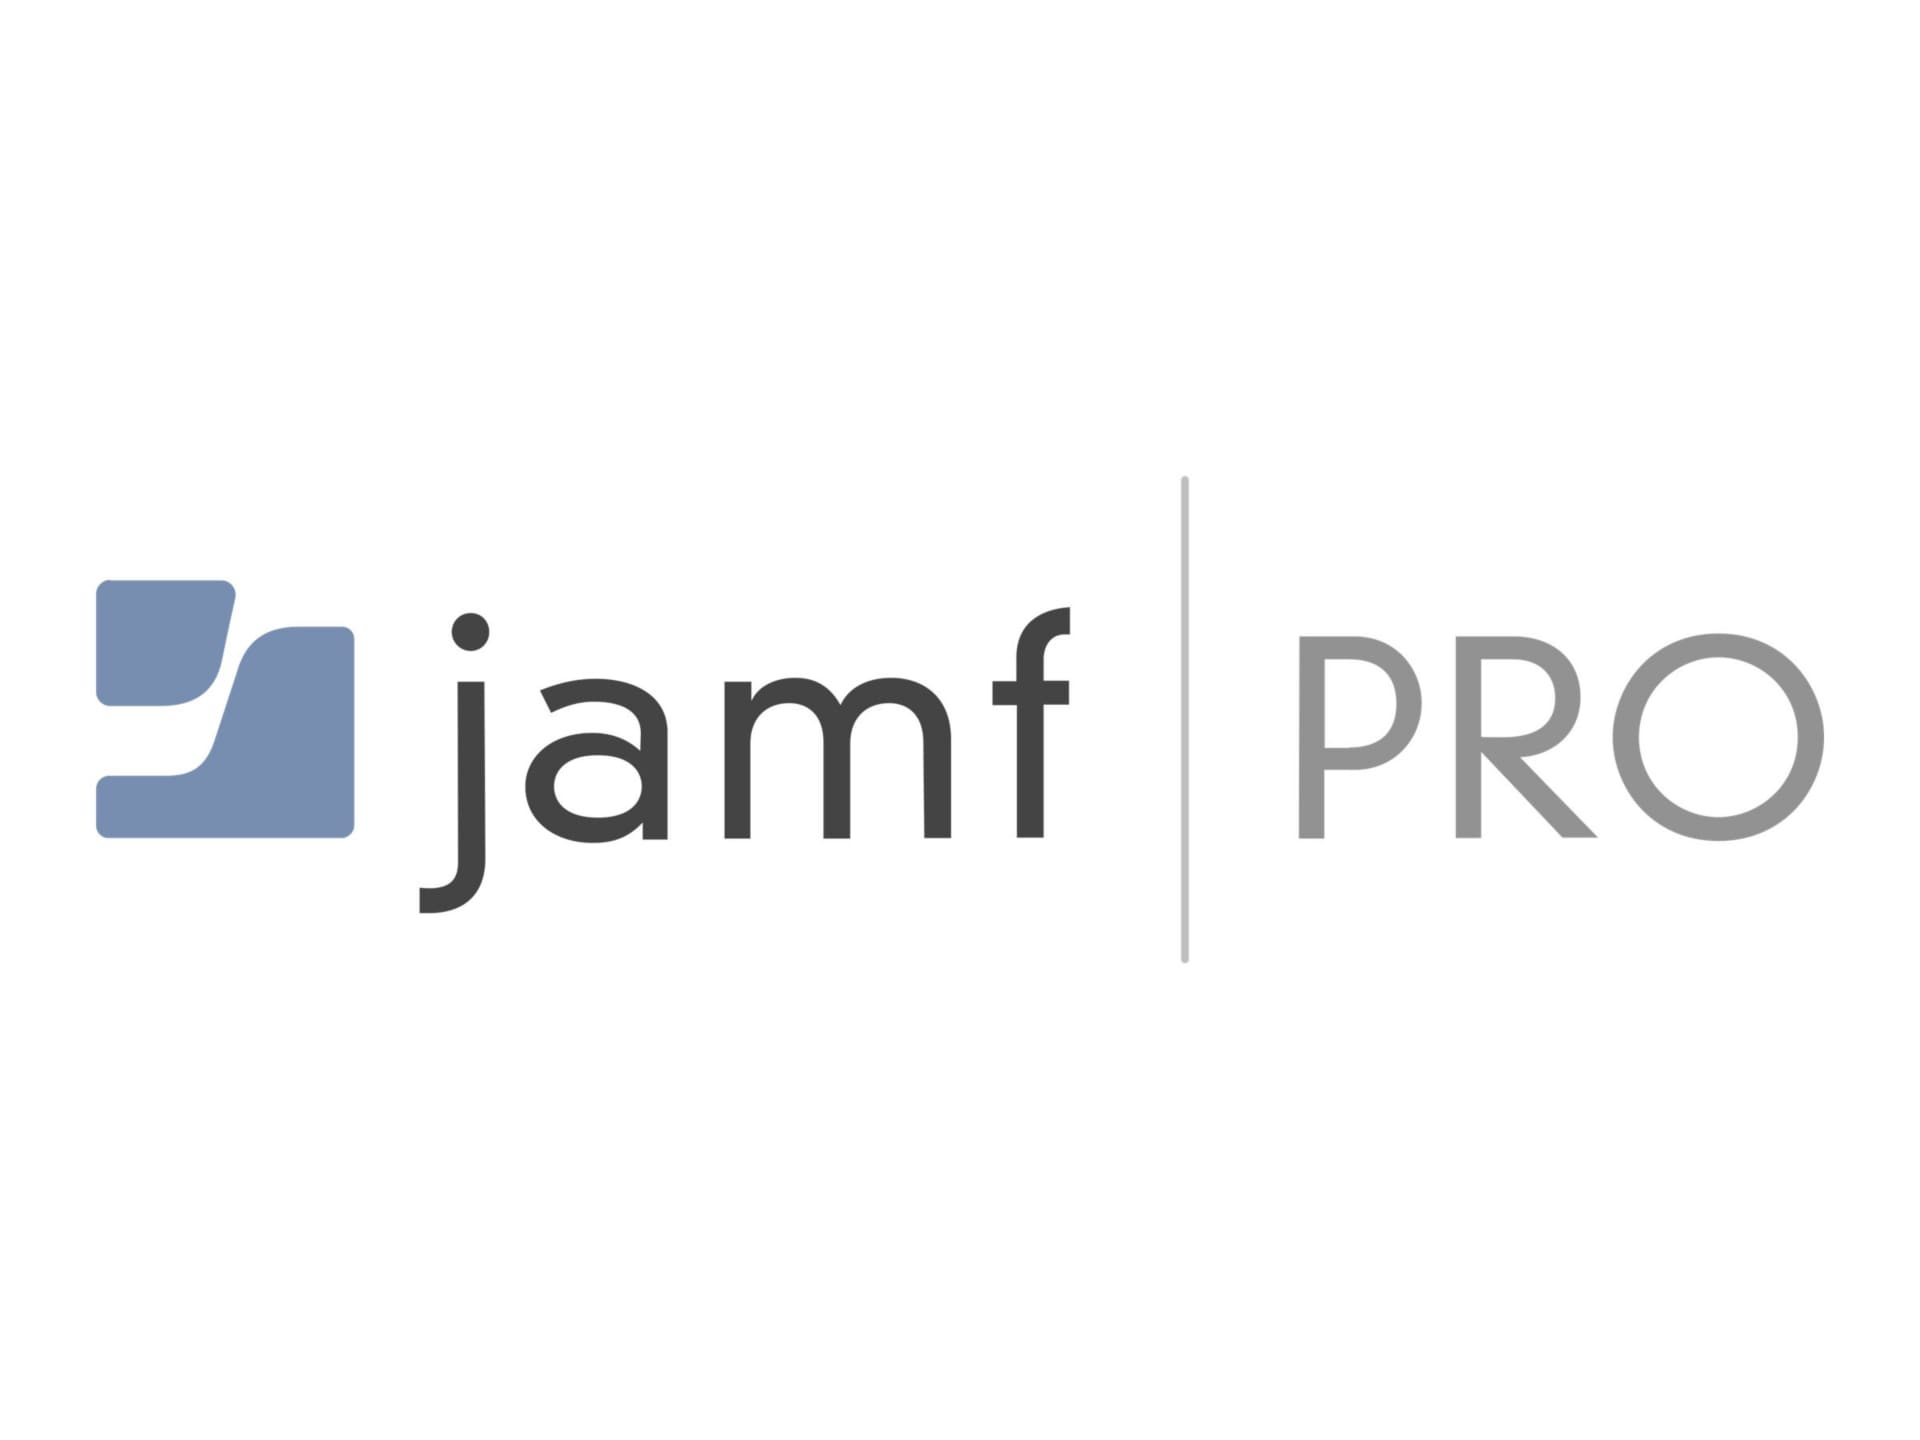 JAMF PRO for tvOS - On-Premise Term License (annual) - 1 tvOS device